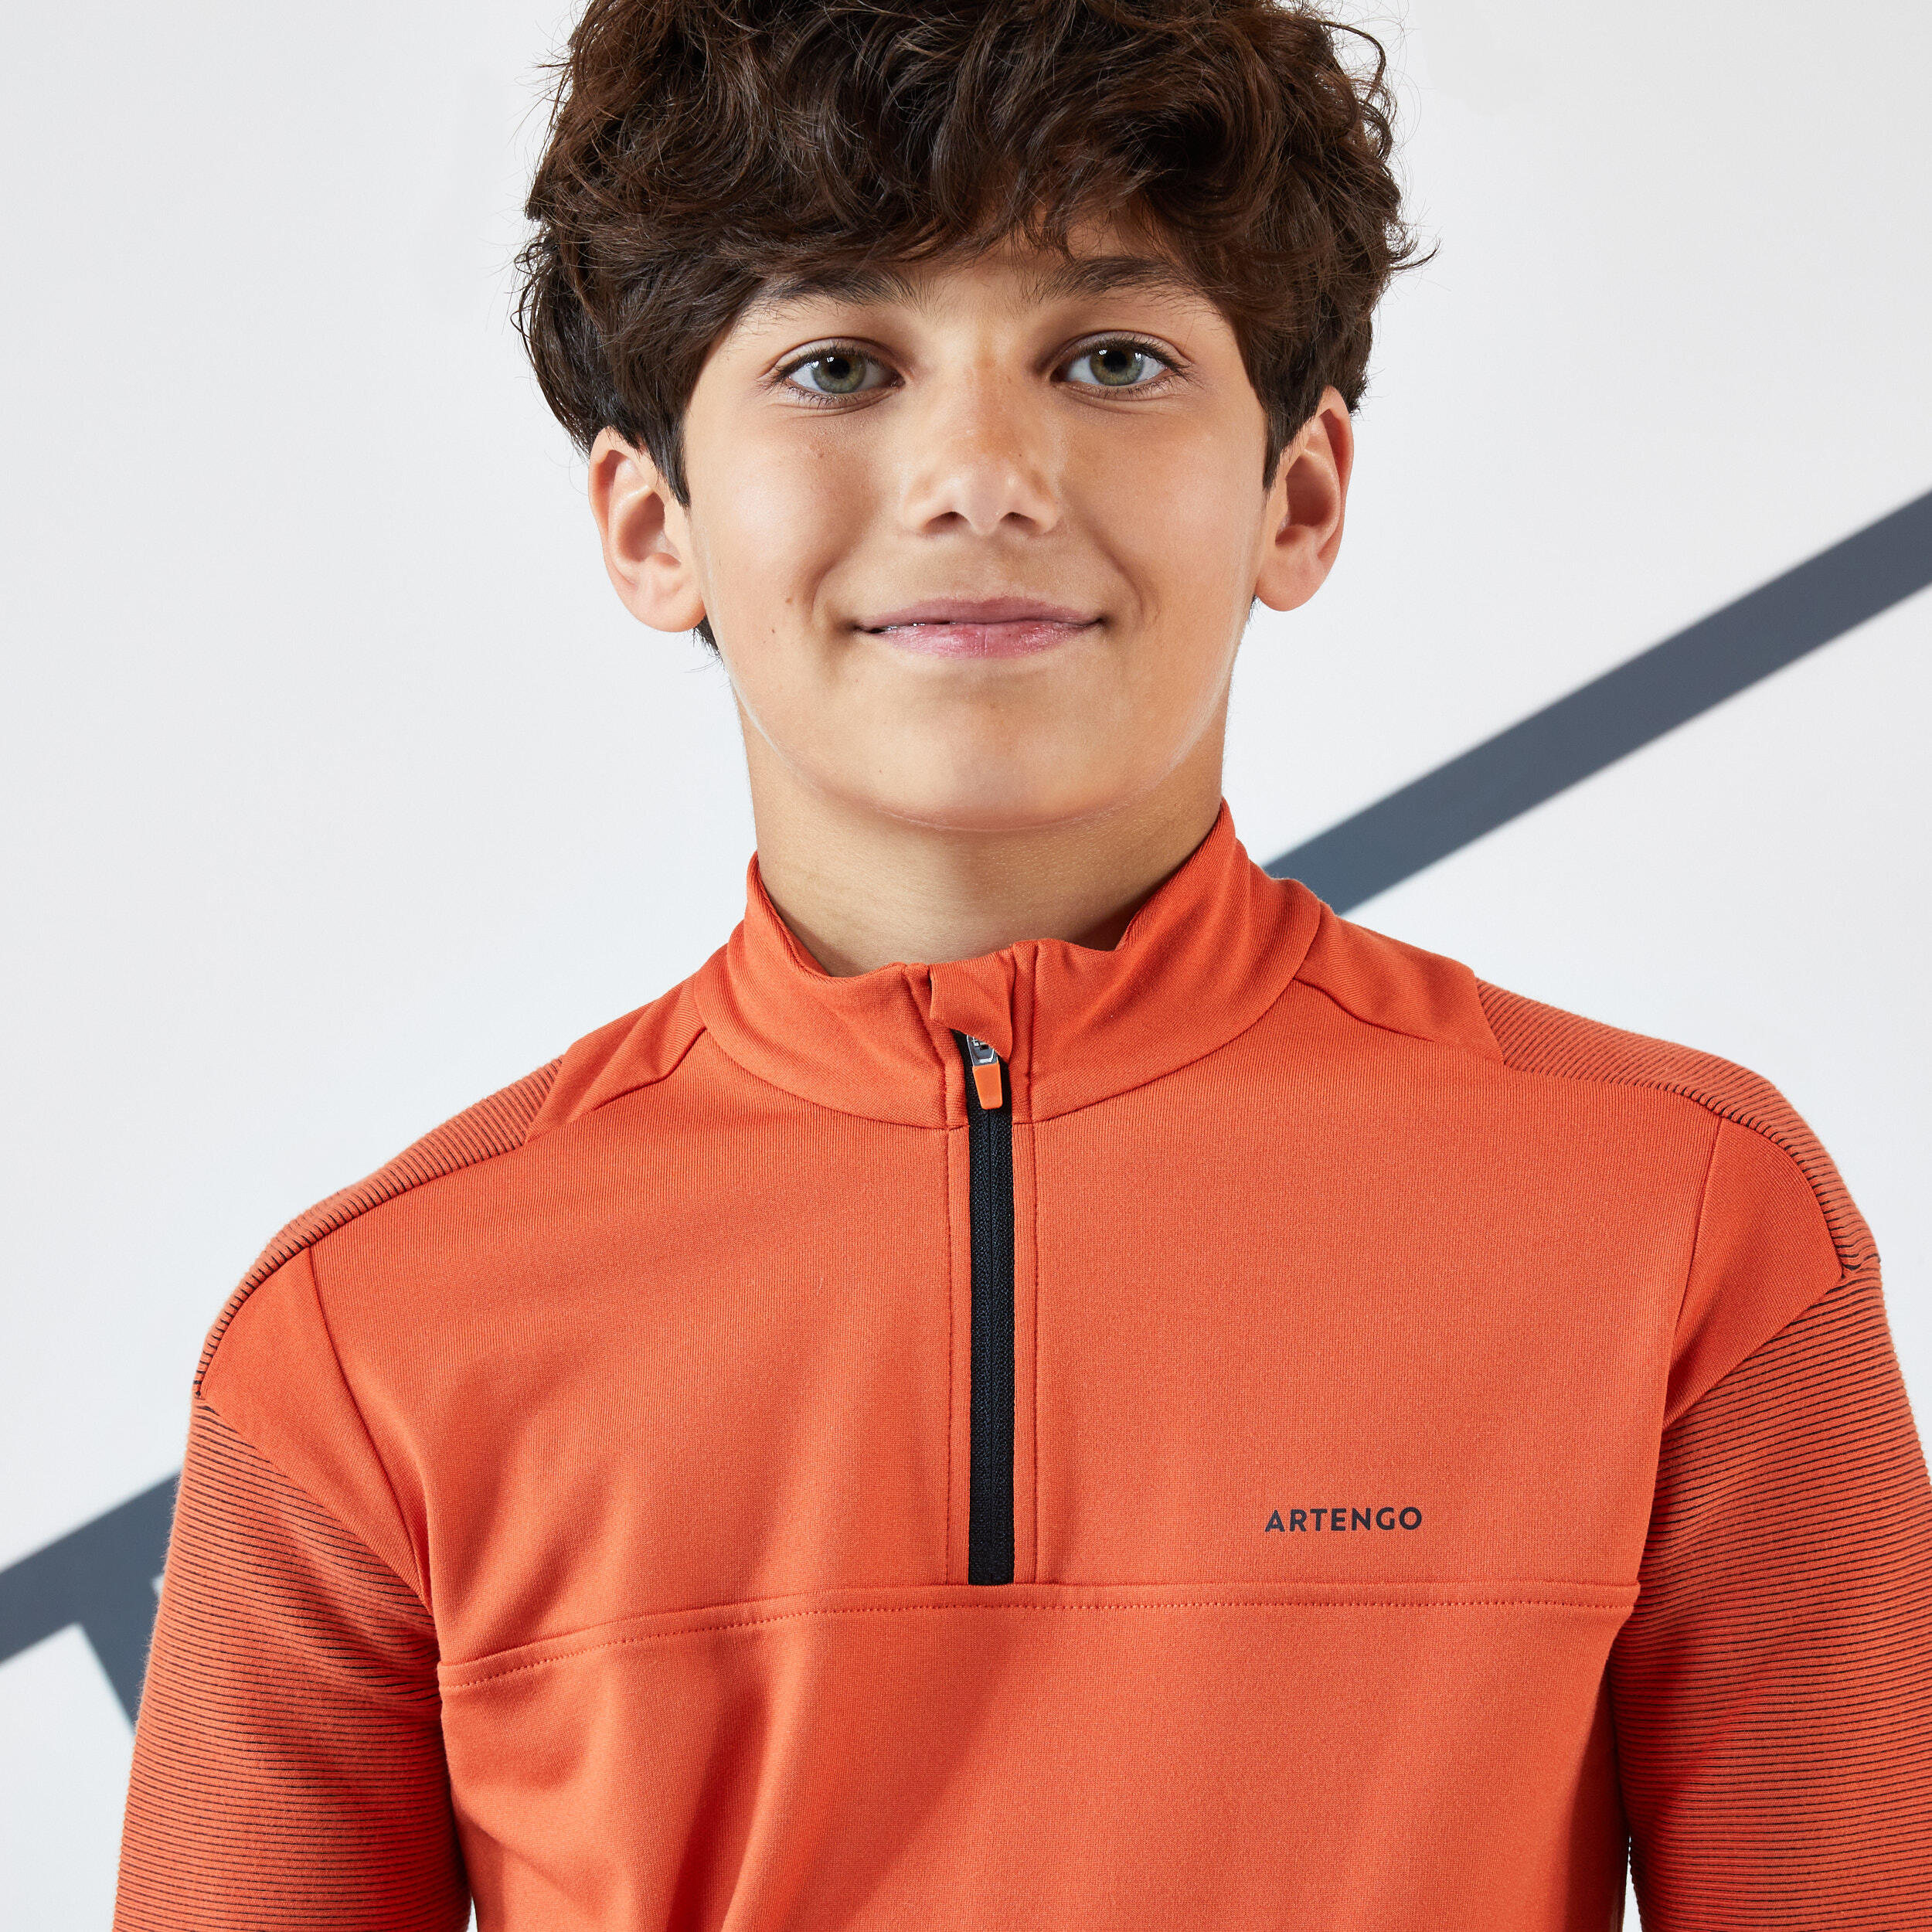 Boys' Long-Sleeved Half-Zip Thermal Tennis T-Shirt - Orange/Terracotta 3/4